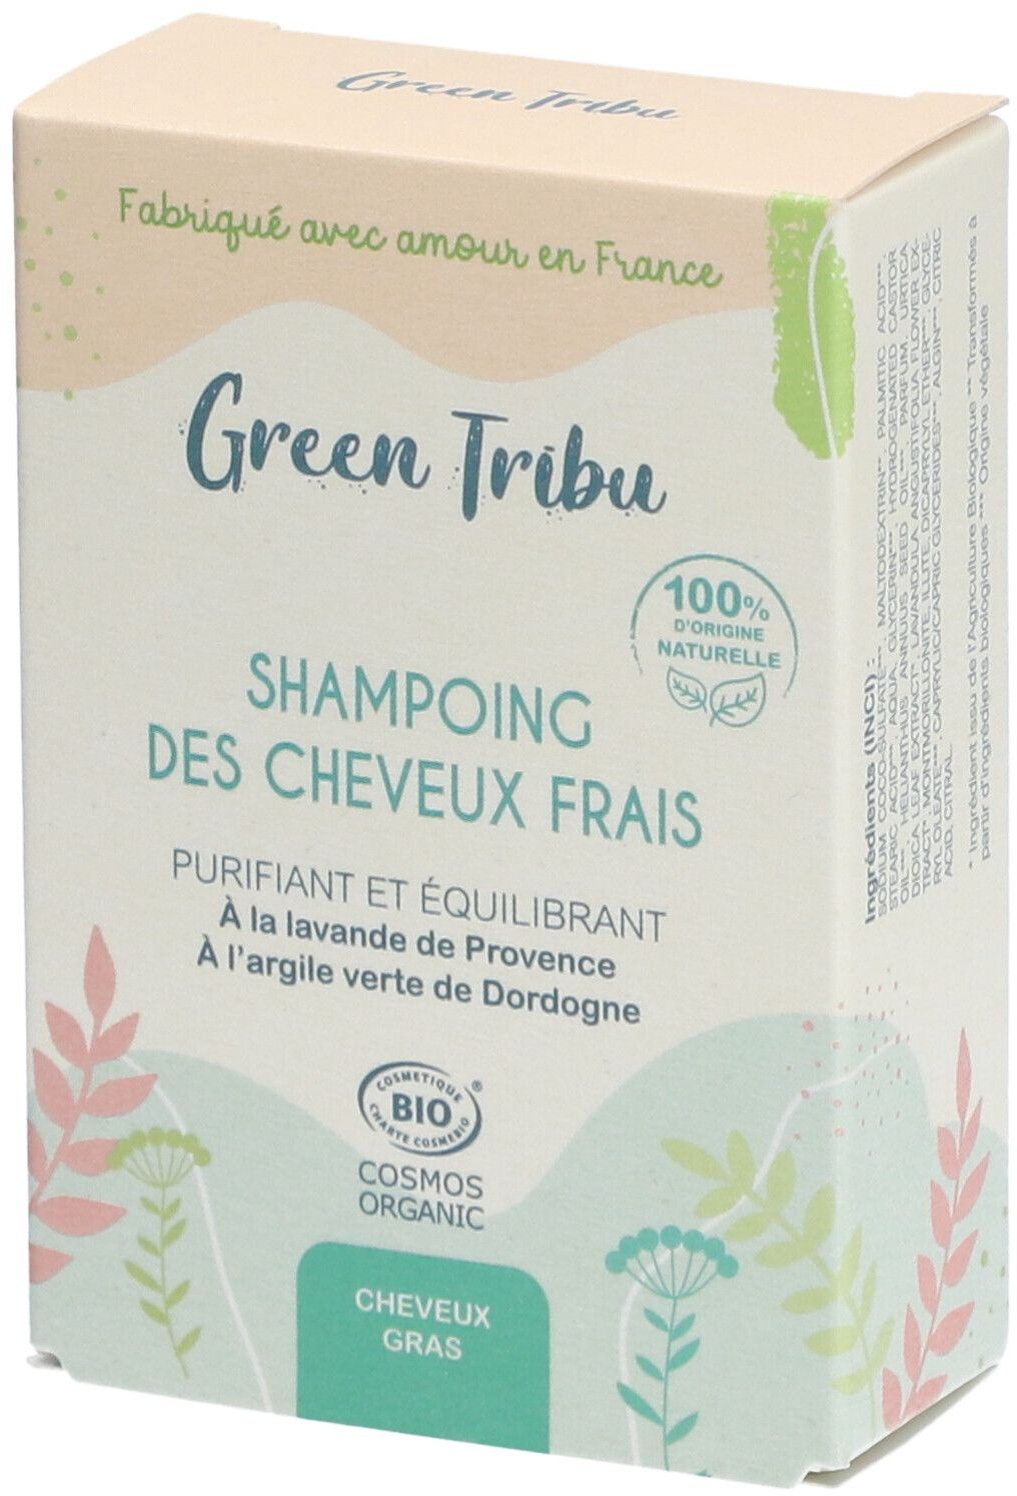 Green Tribu SHAMPOING DES CHEVEUX FRAIS 85 g shampooing